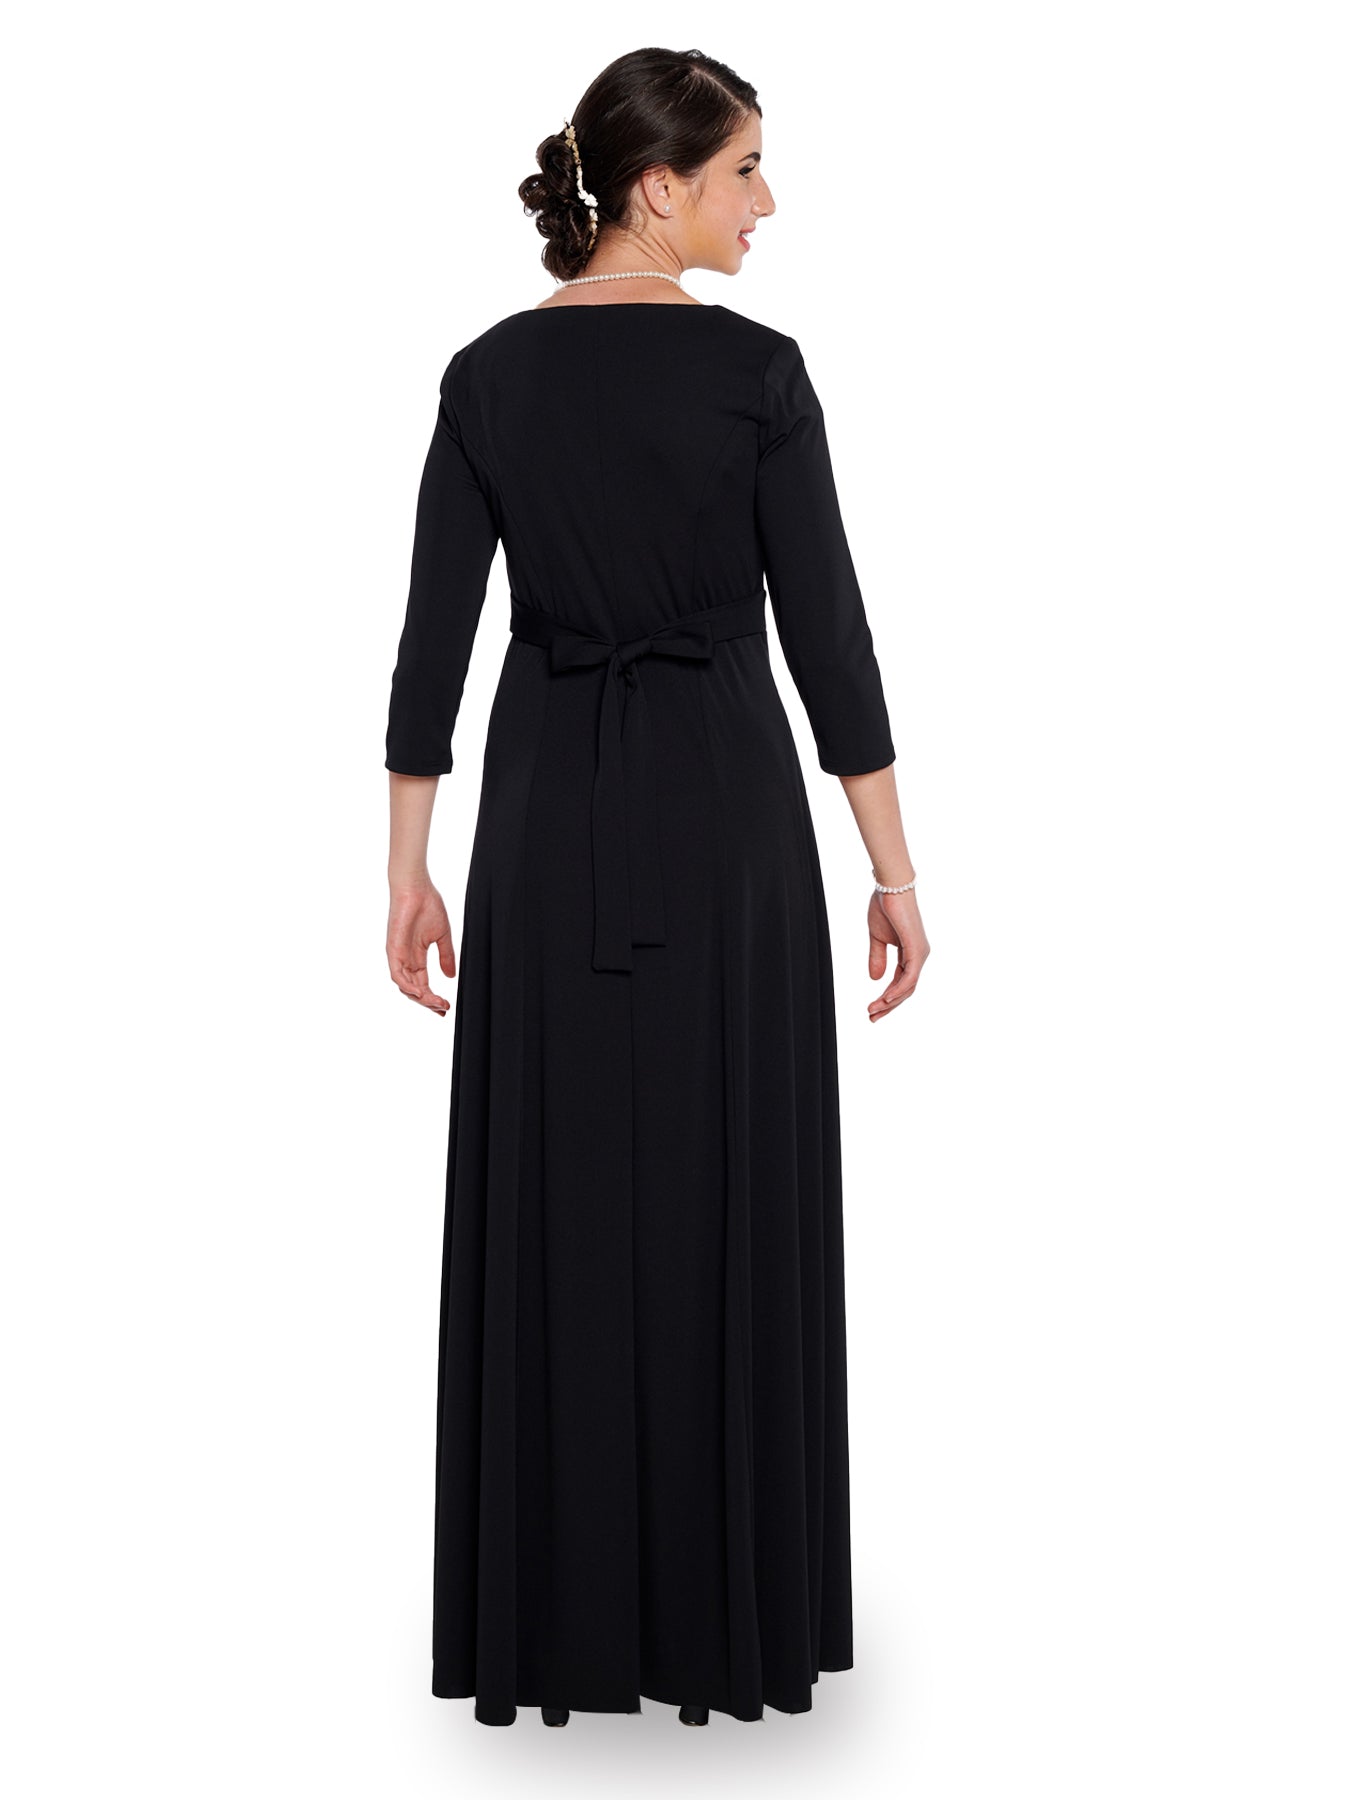 NATALIE (Style #125) - Scoop Neckline 3/4 Sleeve Dress